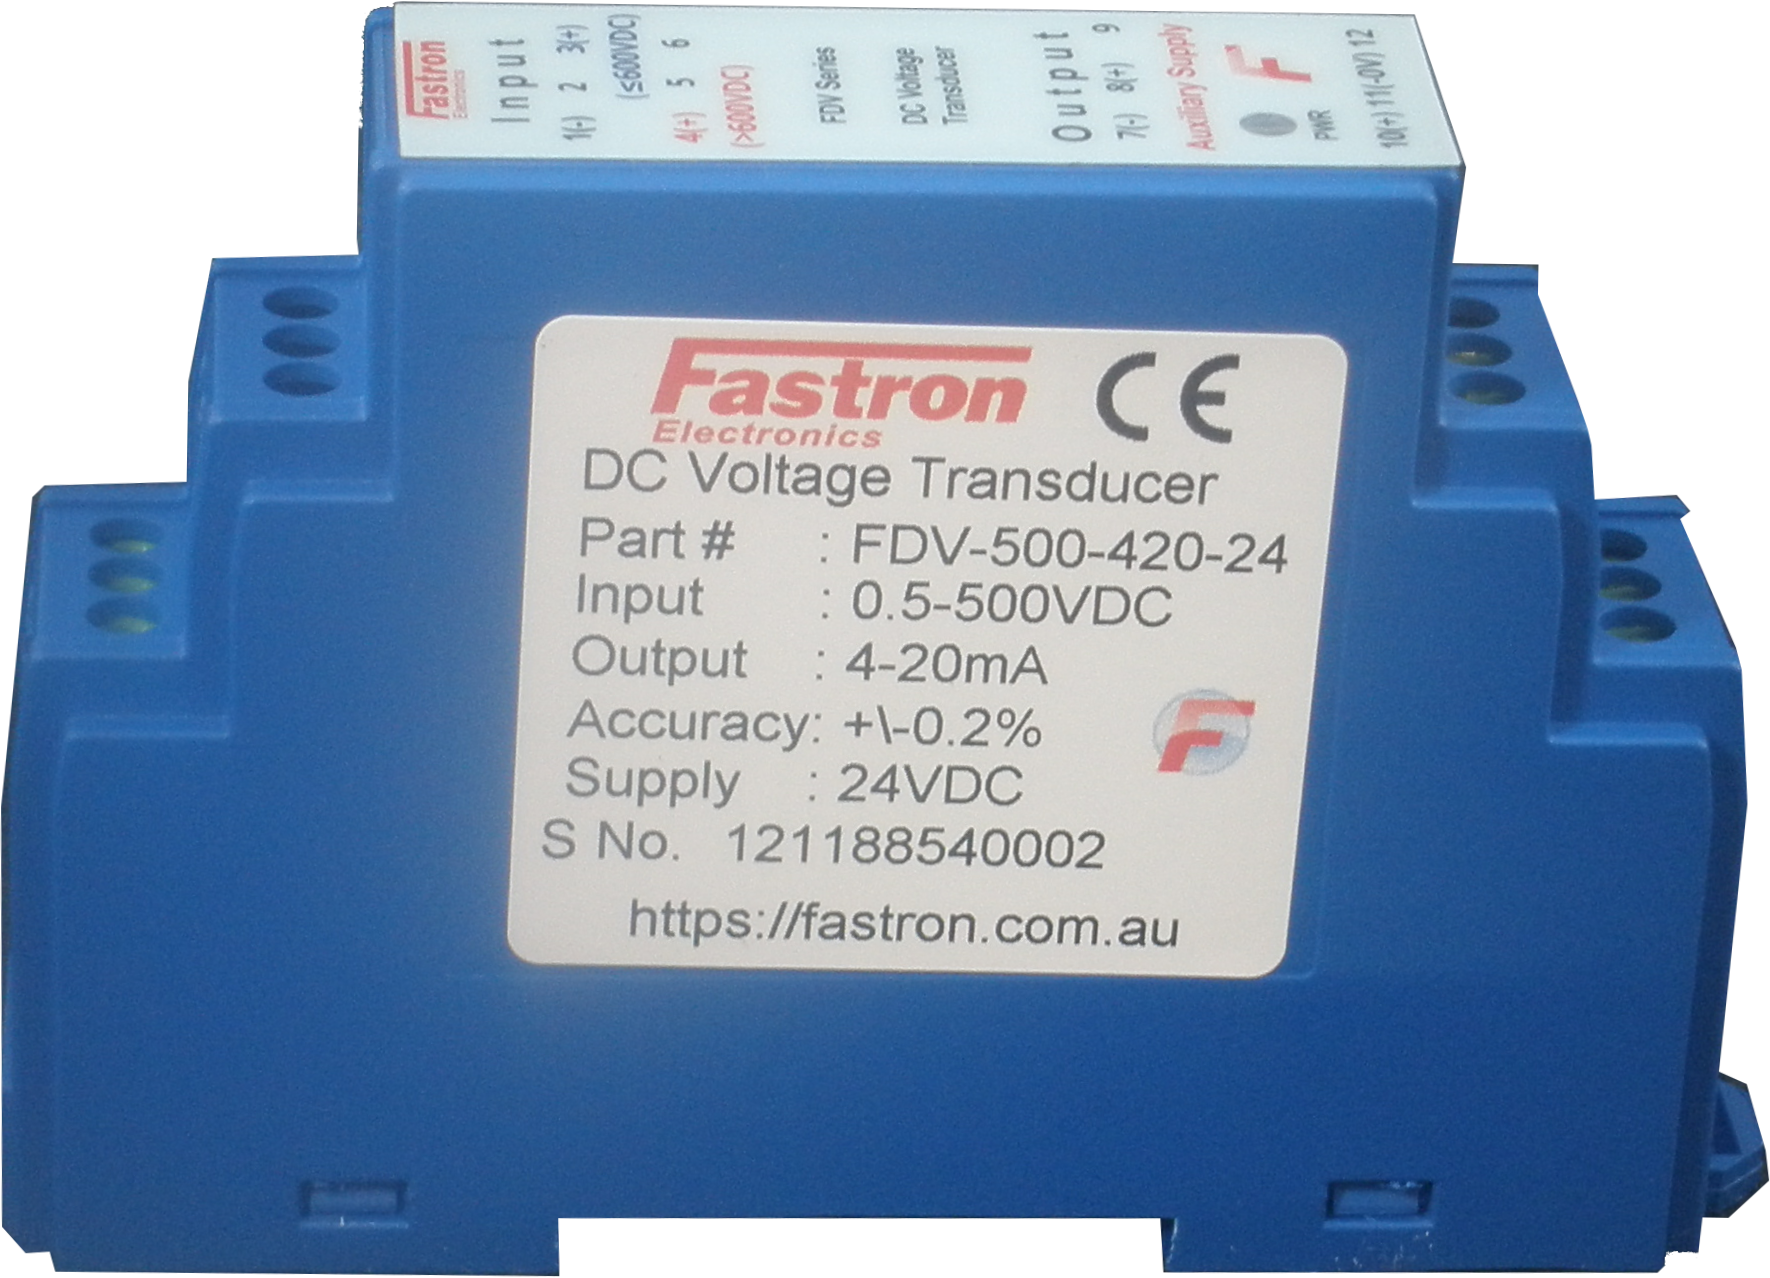 FDV-30-420-24, DC Voltage Transducer, Din Rail Mount, 0-30VDC, 4-20mA output, 24VDC Supply Voltage, 150mS Response